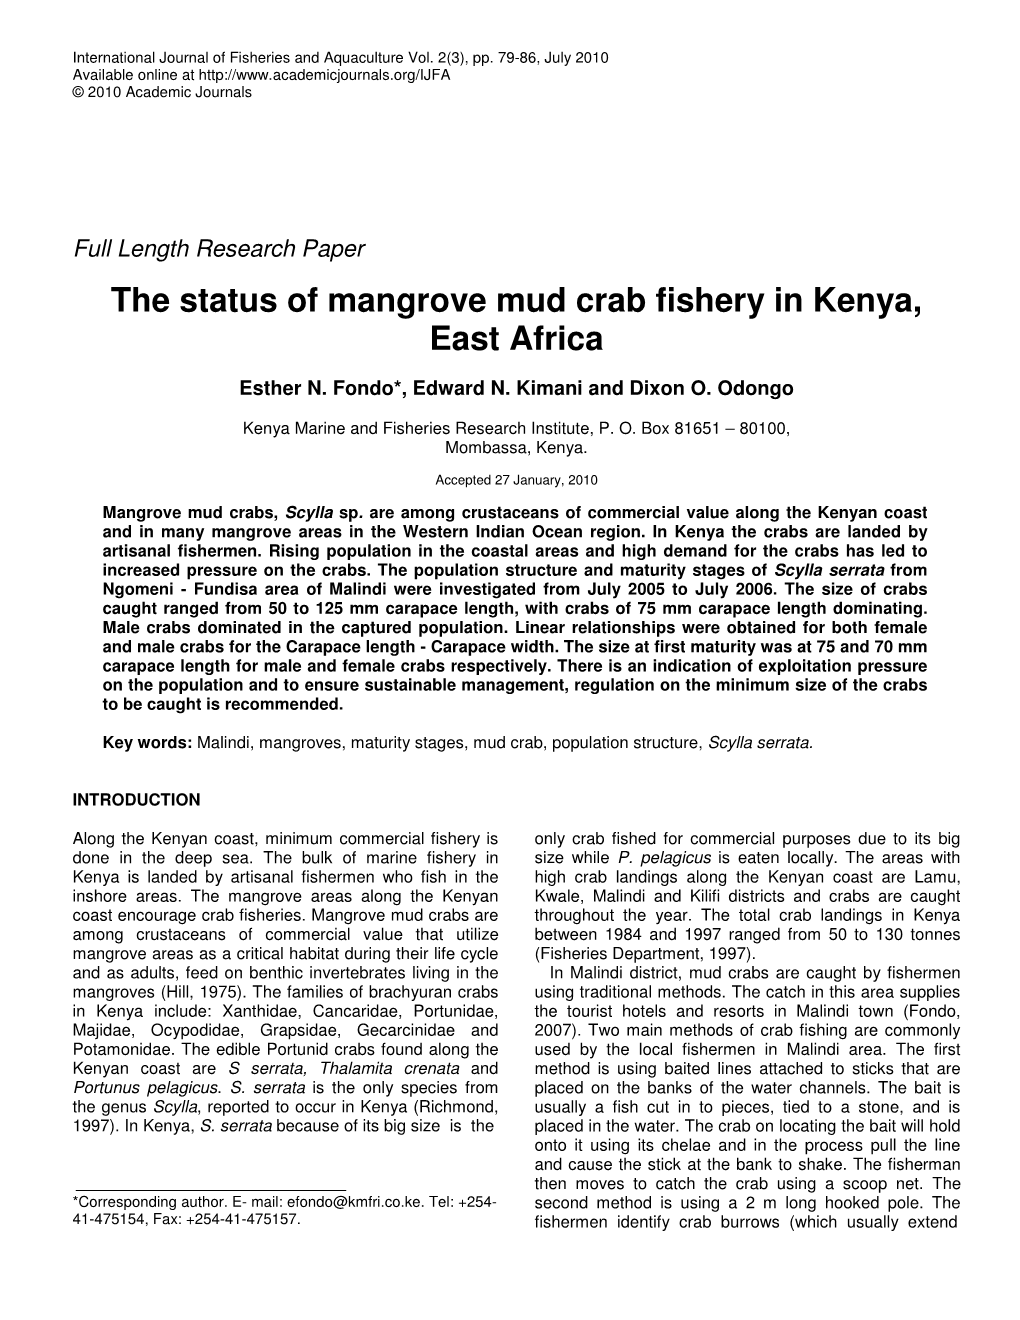 The Status of Mangrove Mud Crab Fishery in Kenya, East Africa